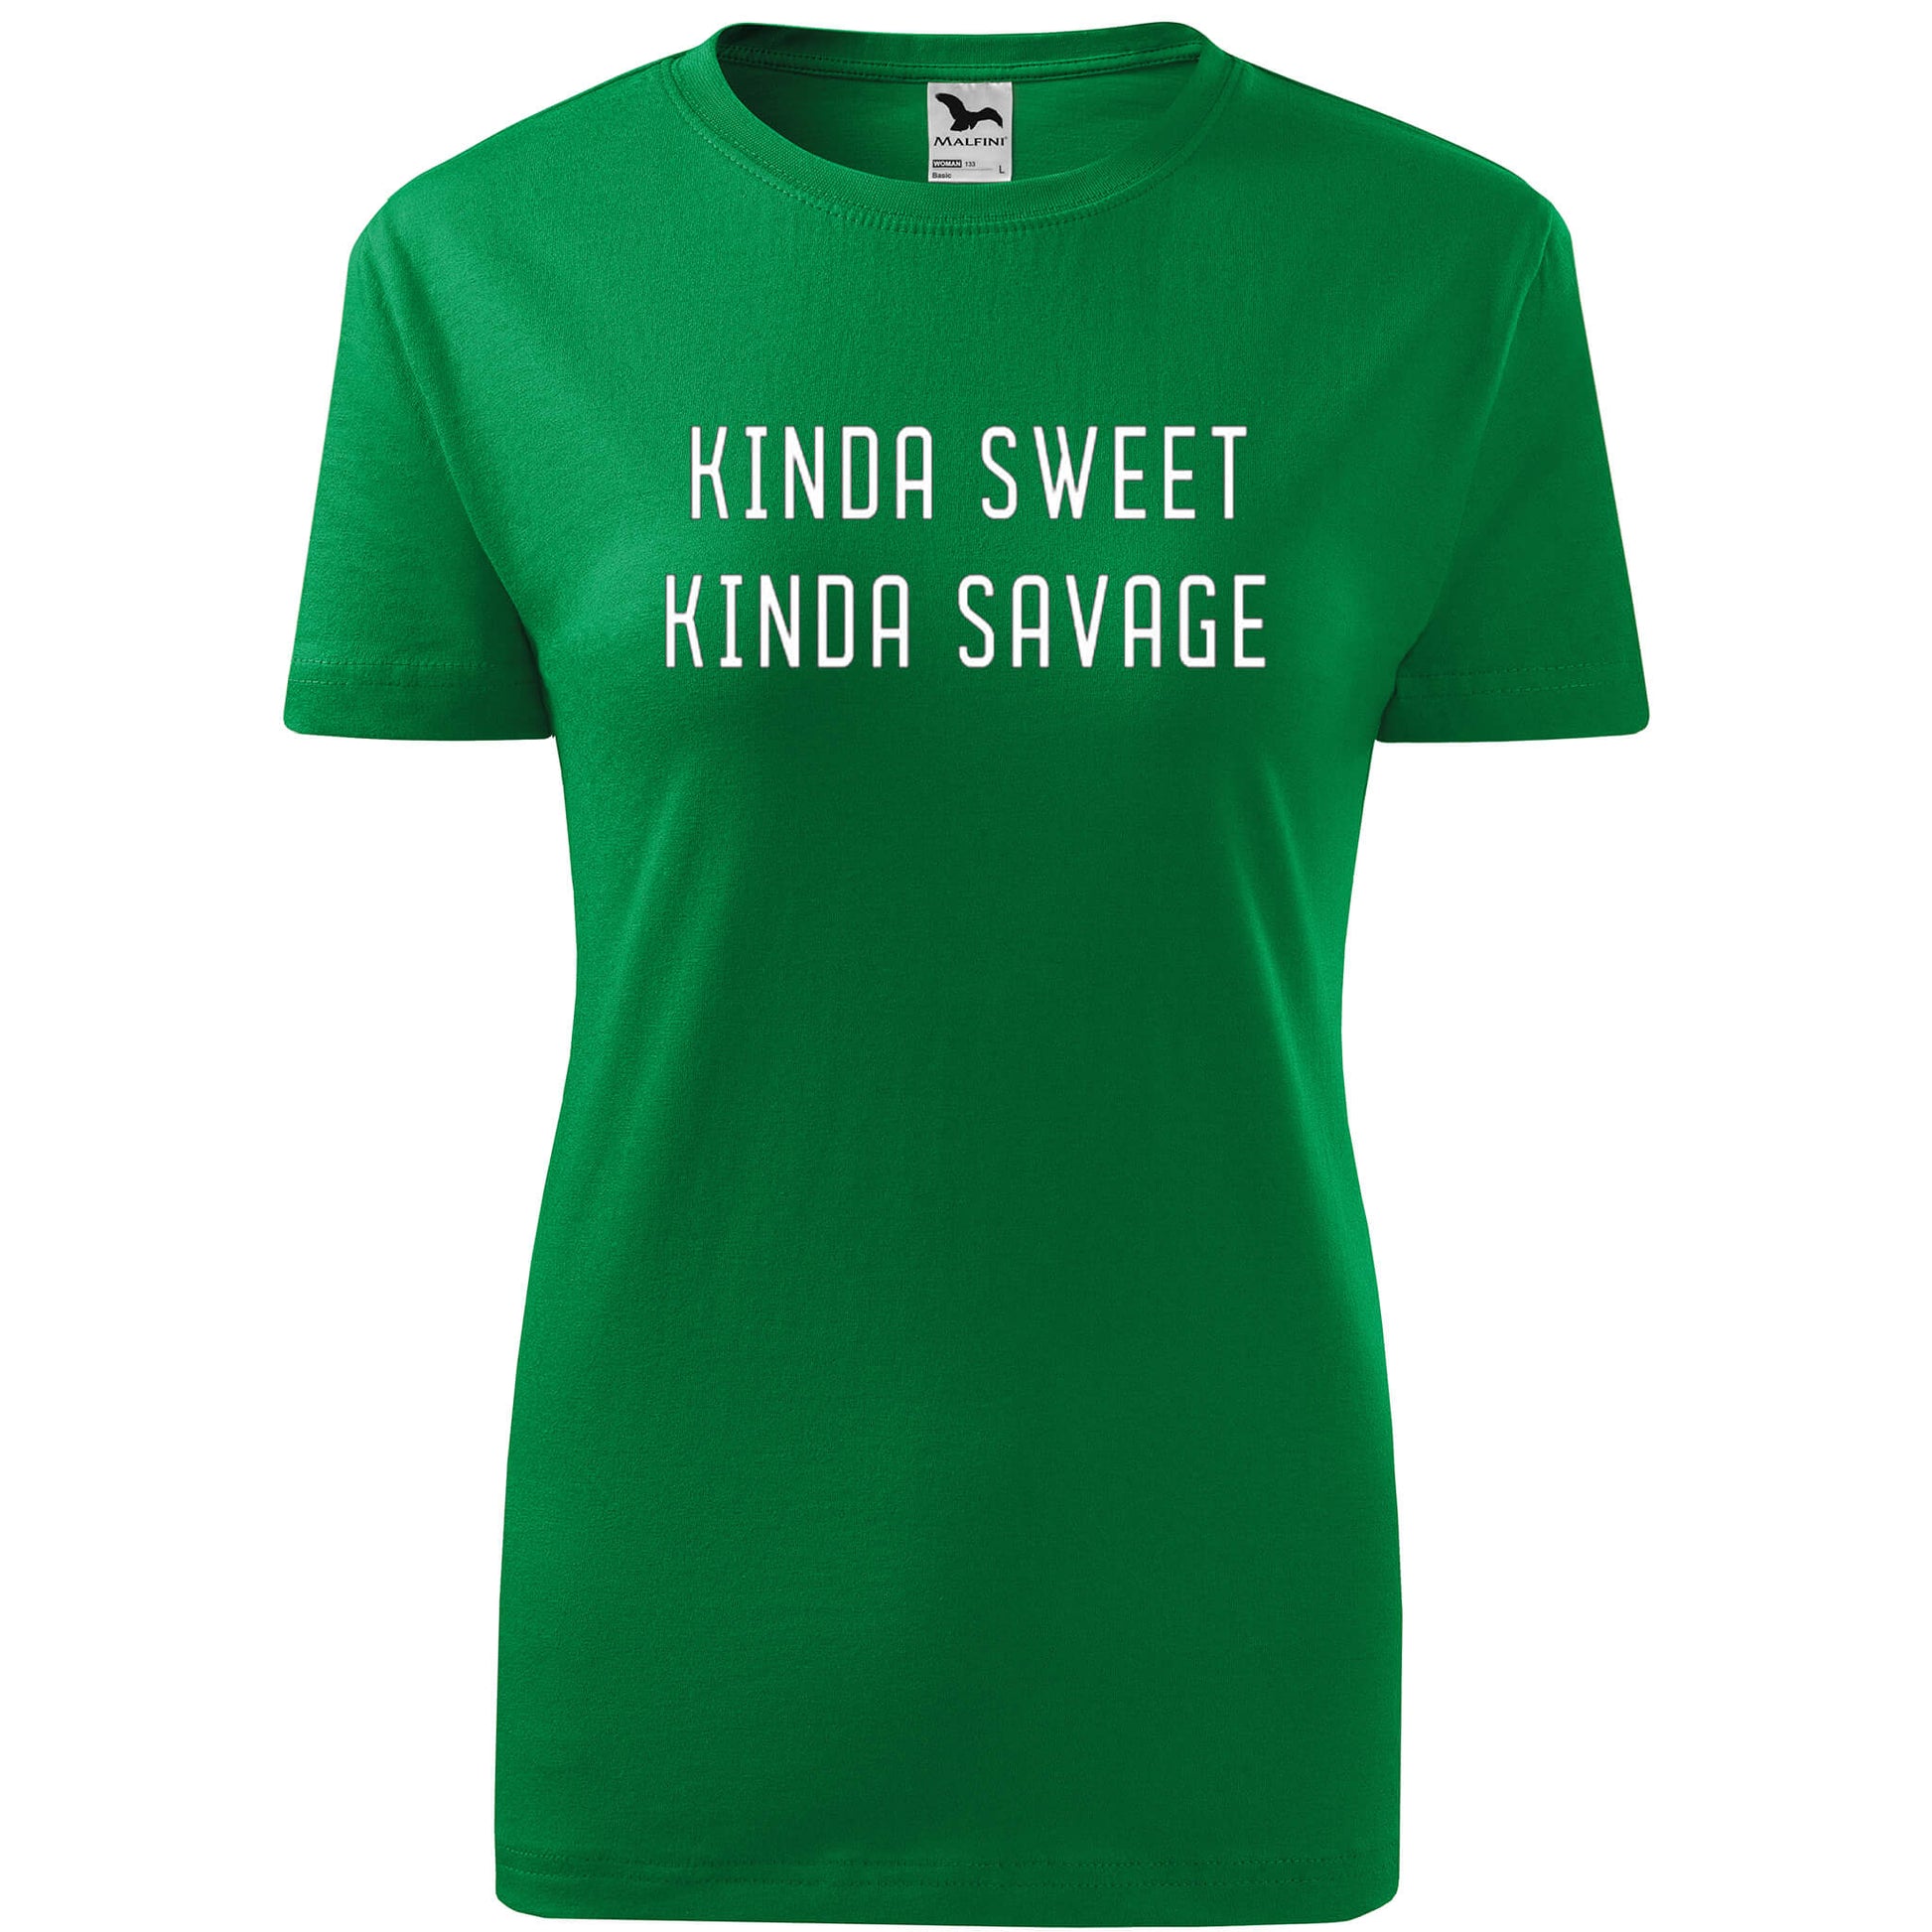 T-shirt - Kinda sweet kinda savage - rvdesignprint